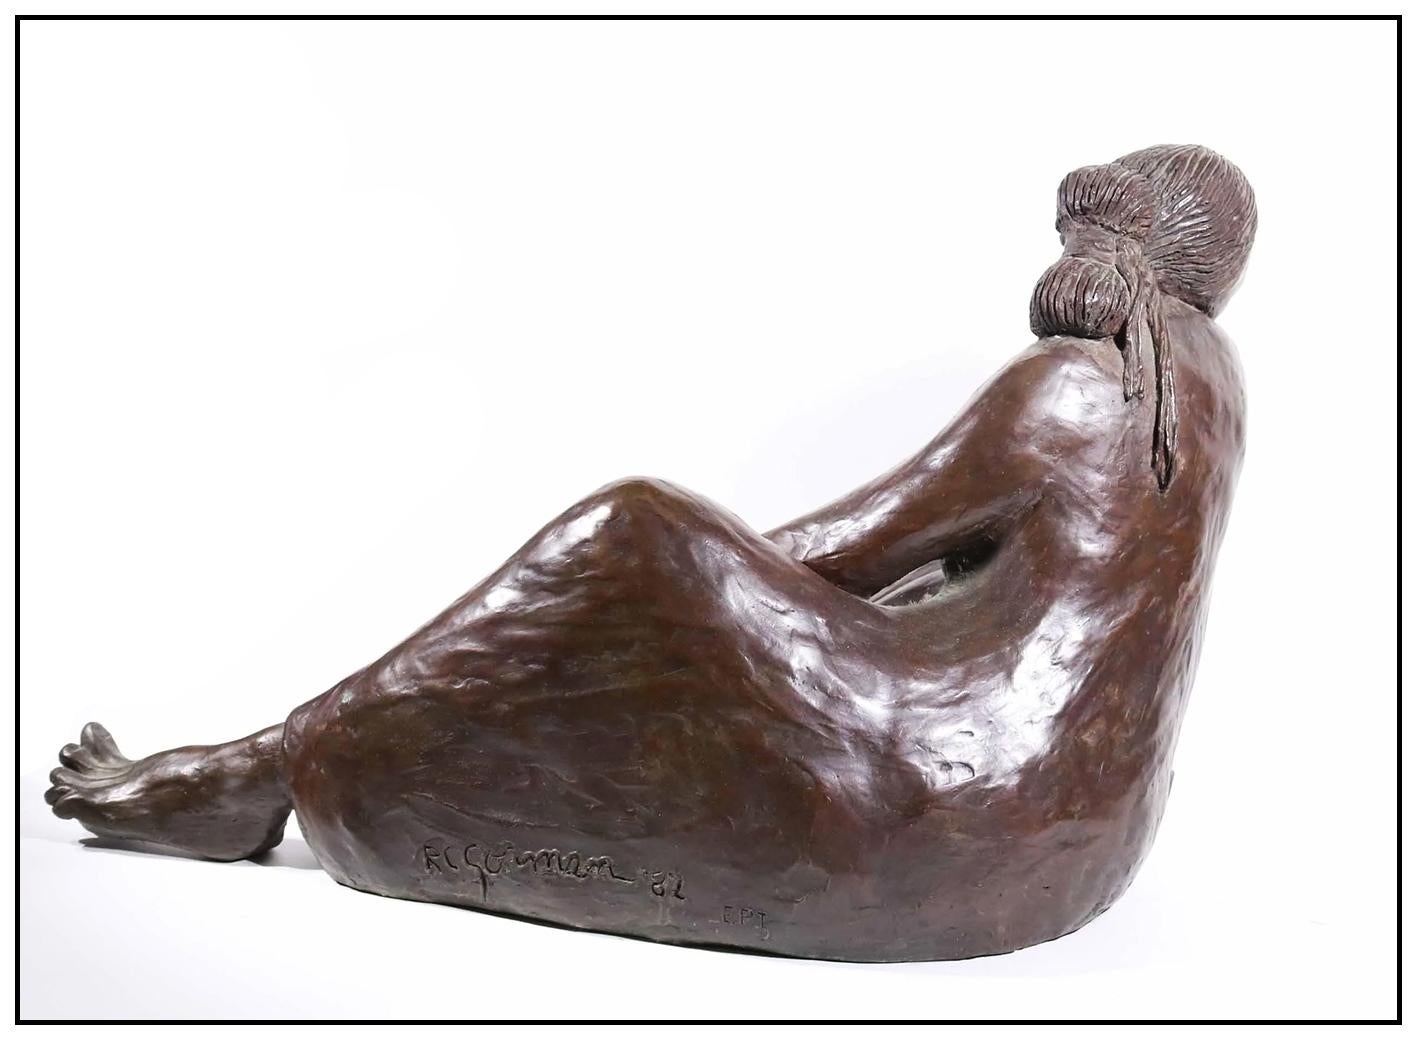 R.C. Gorman Authentic and Large Bronze Sculpture, 